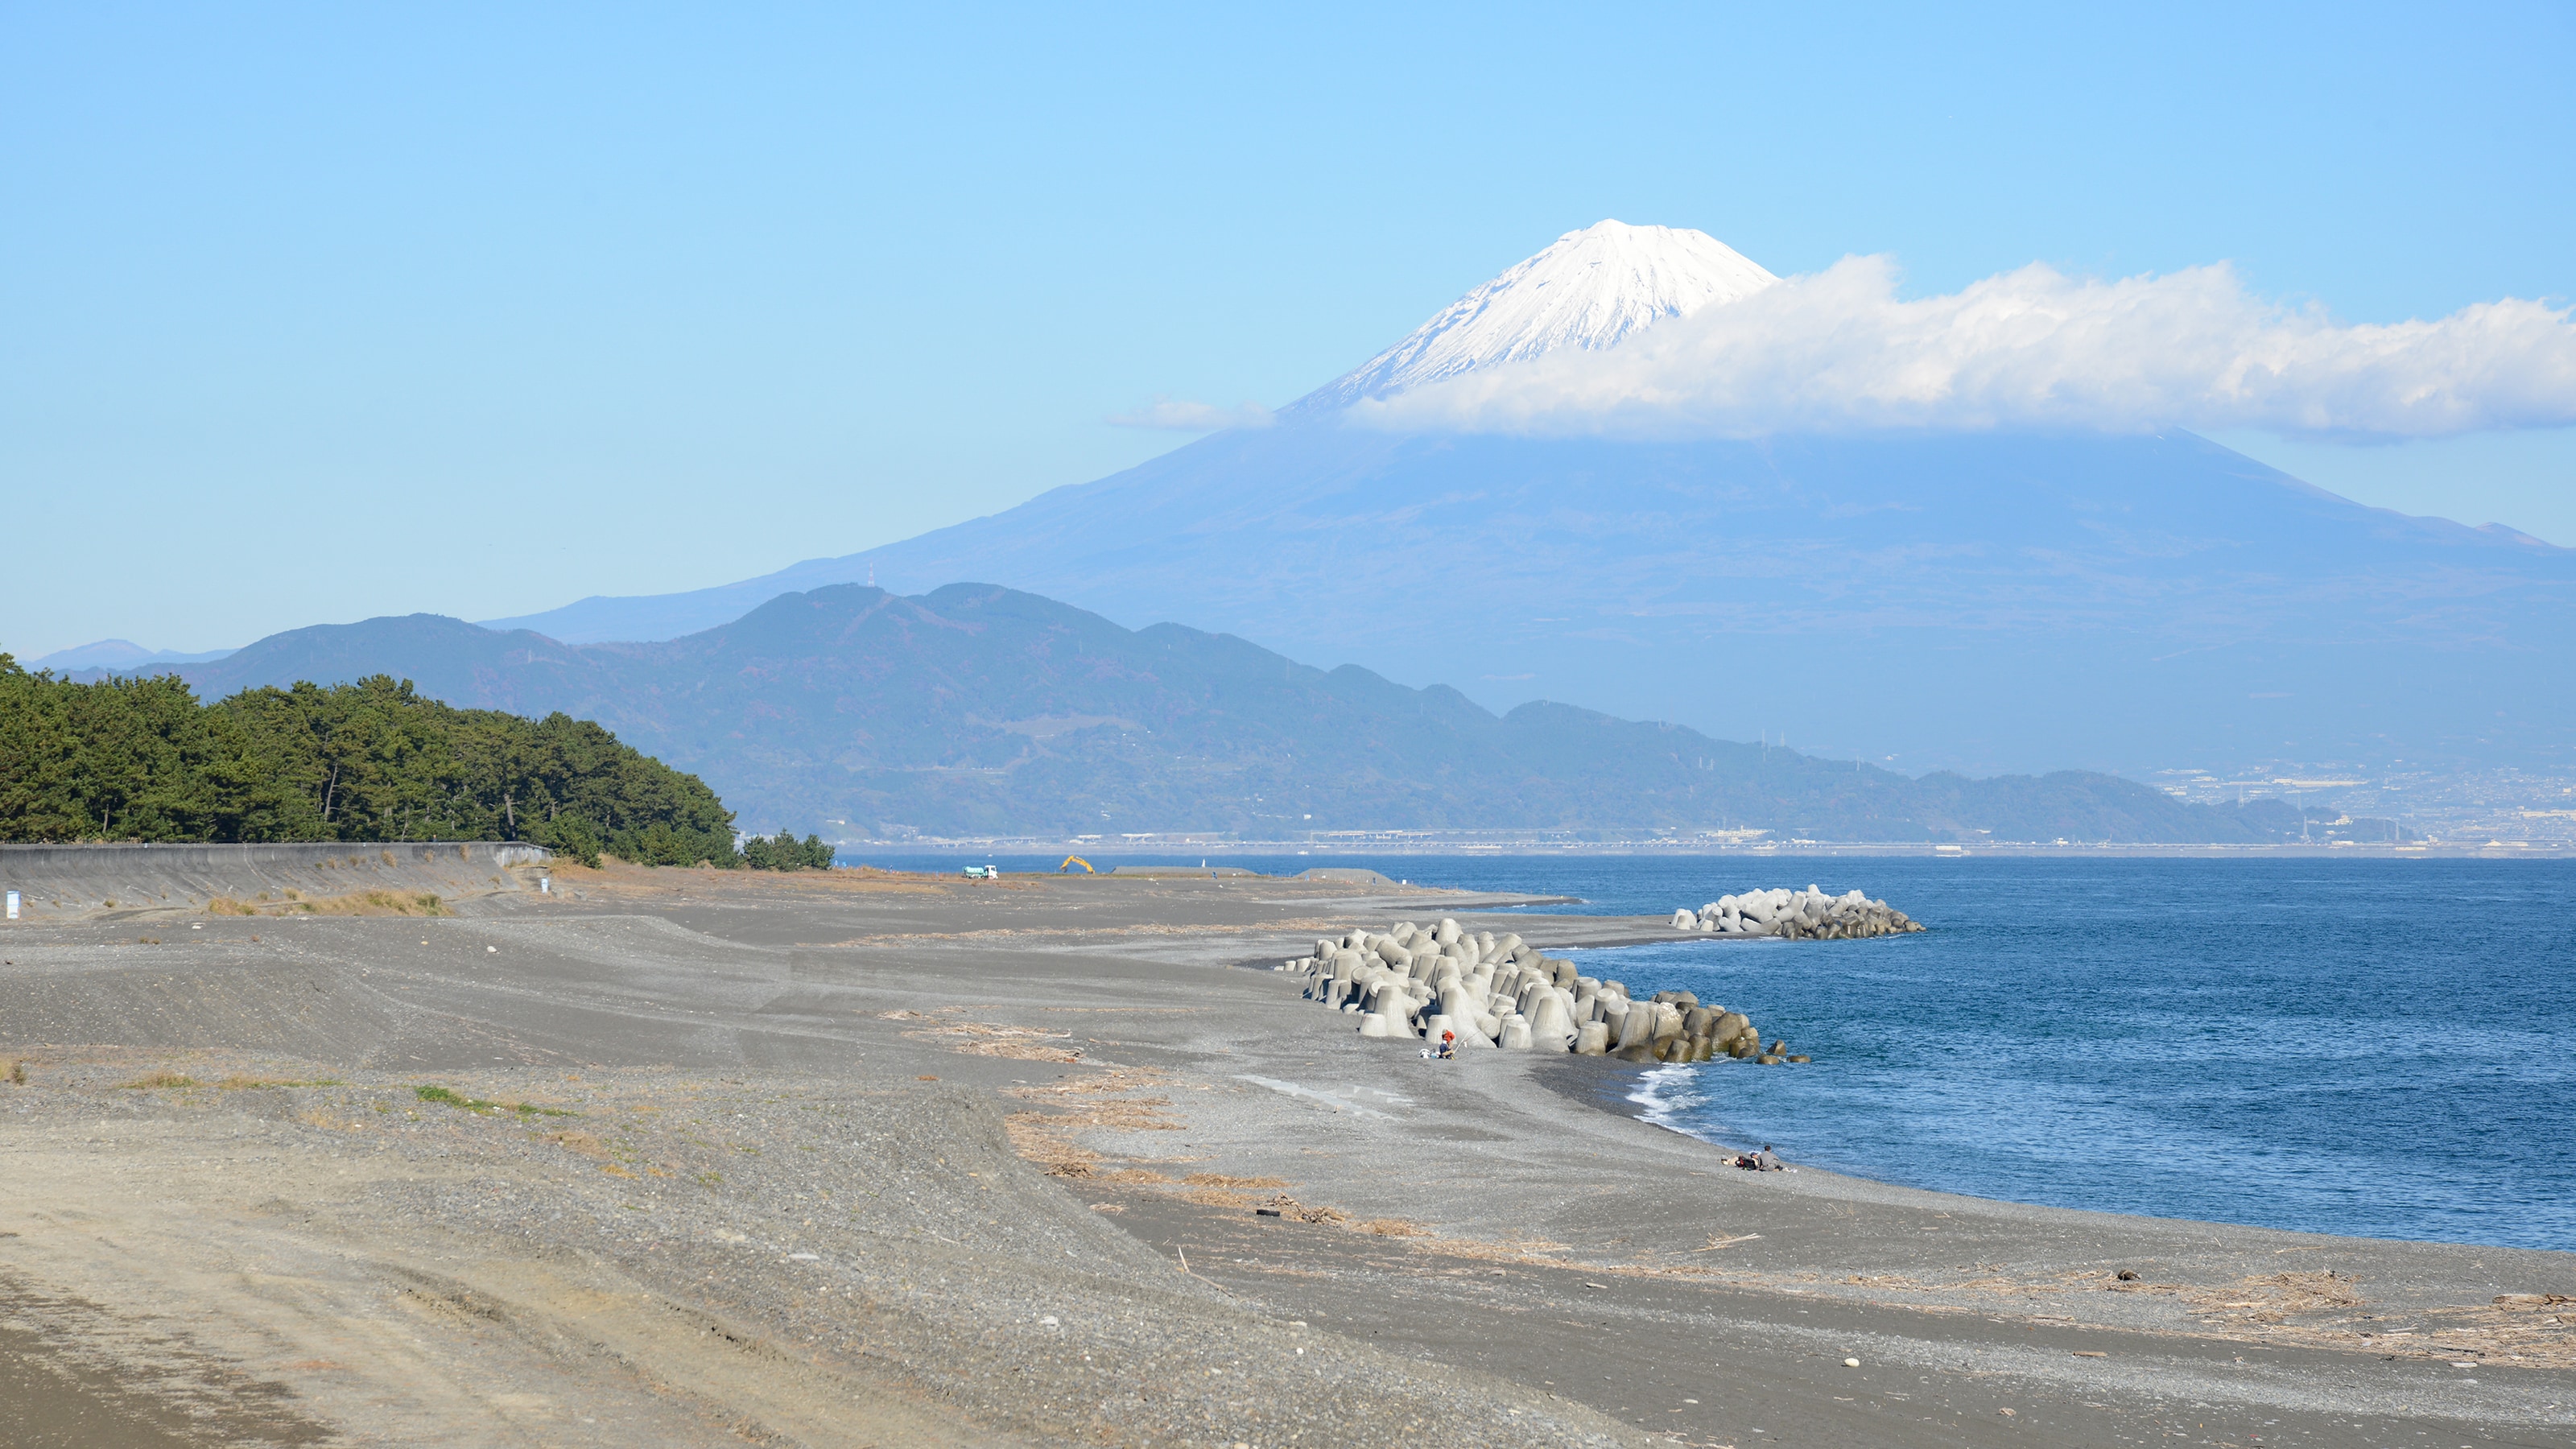 ** [Sekitar / Kamagasaki] Tempat pemotretan di mana Anda dapat melihat pohon pinus dan Gunung Fuji / 10 menit berjalan kaki di sepanjang kawasan pejalan kaki dari hotel